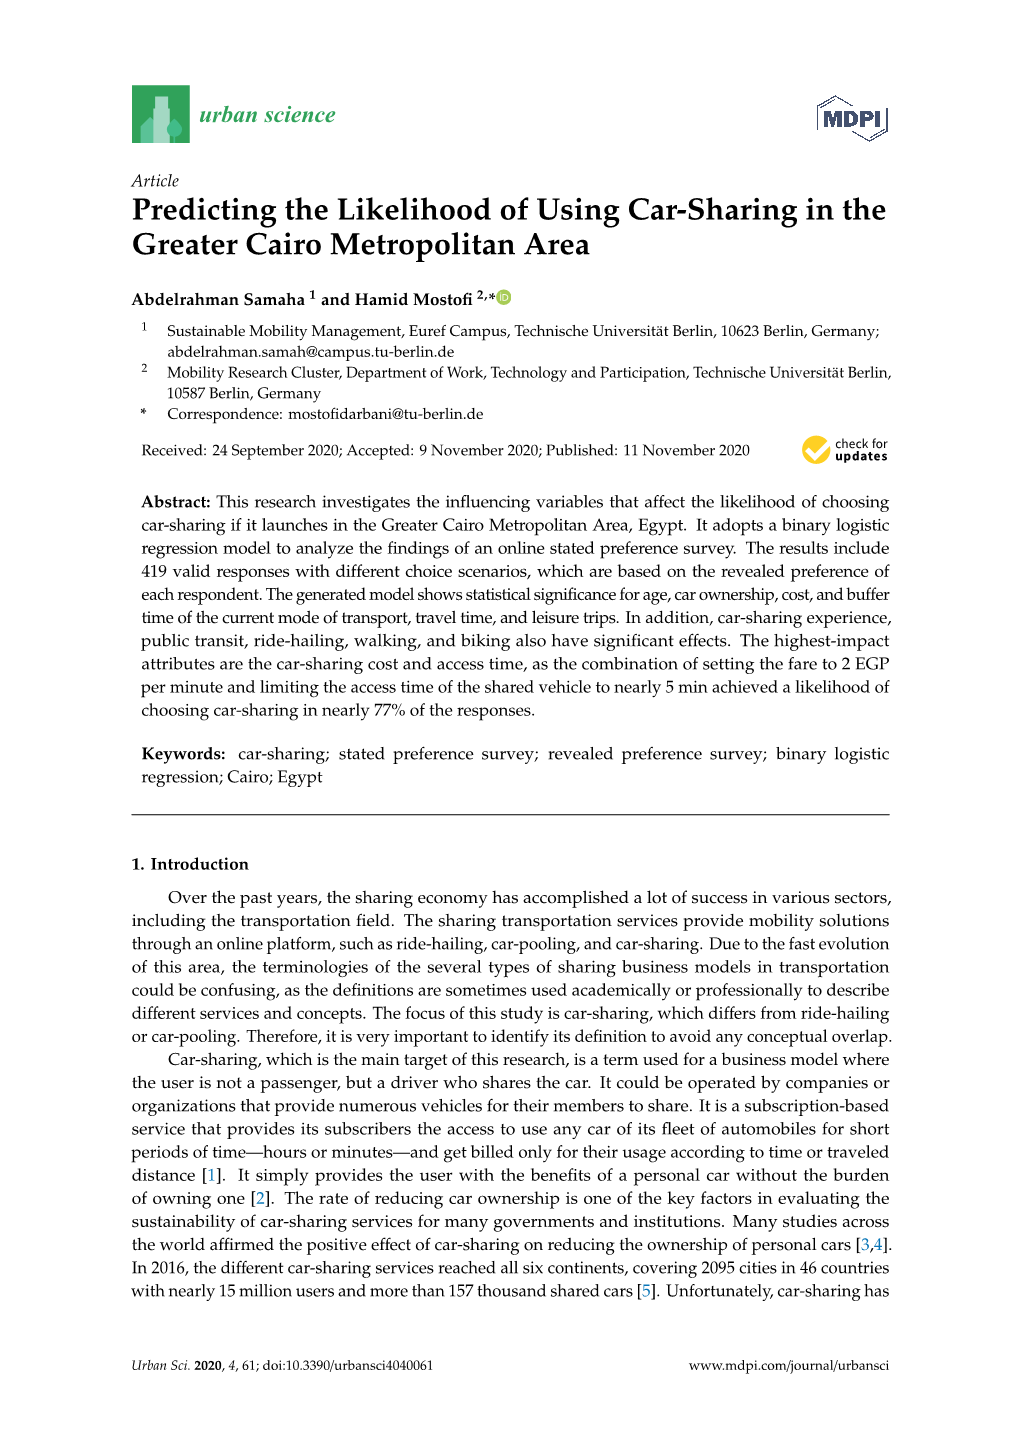 Predicting the Likelihood of Using Car-Sharing in the Greater Cairo Metropolitan Area